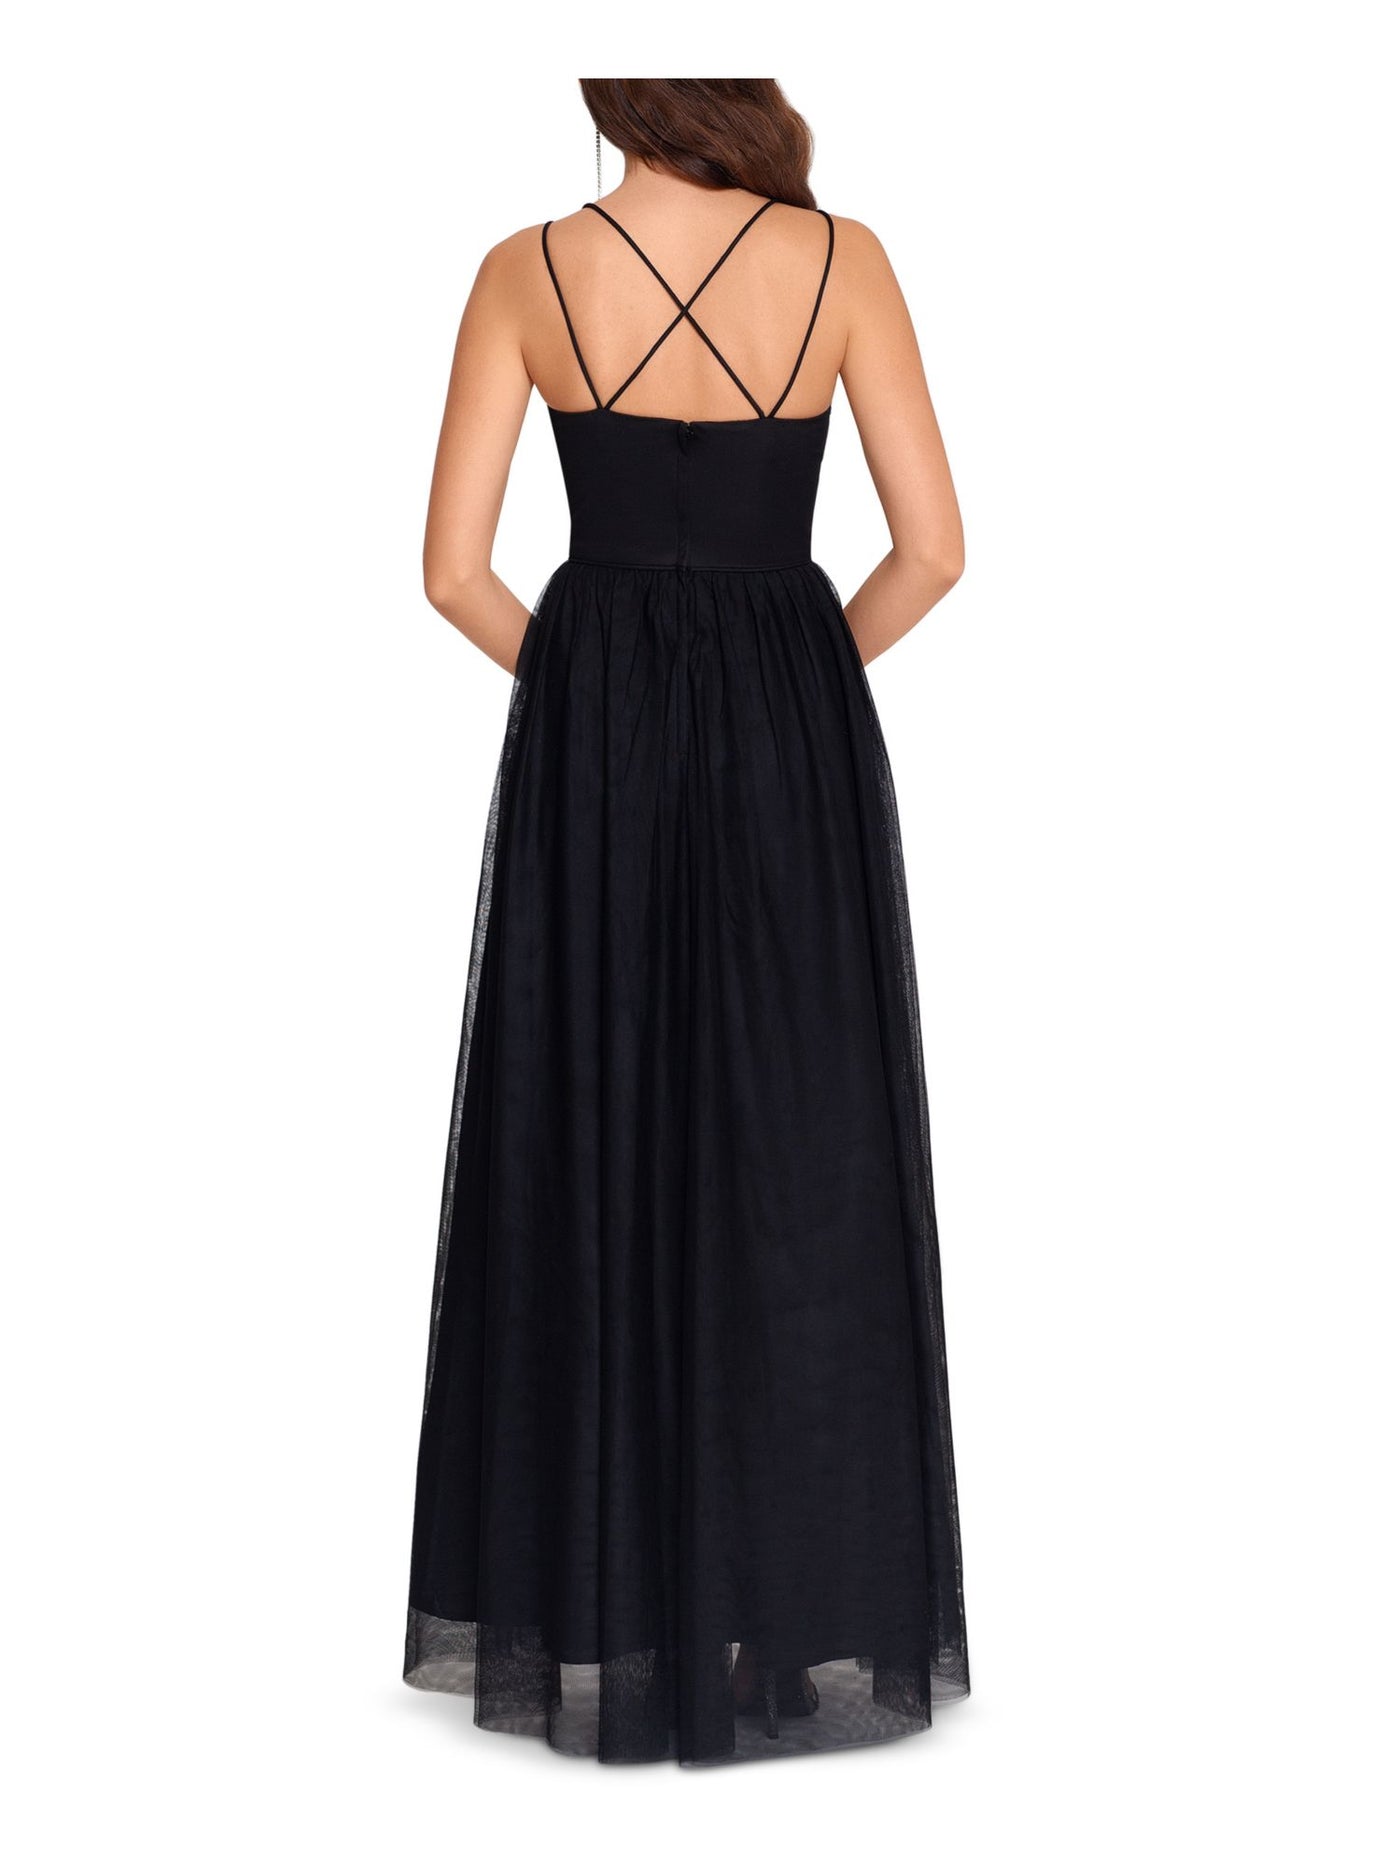 BLONDIE NITES Womens Black Embellished Spaghetti Strap Scoop Neck Full-Length Formal Fit + Flare Dress Juniors 7